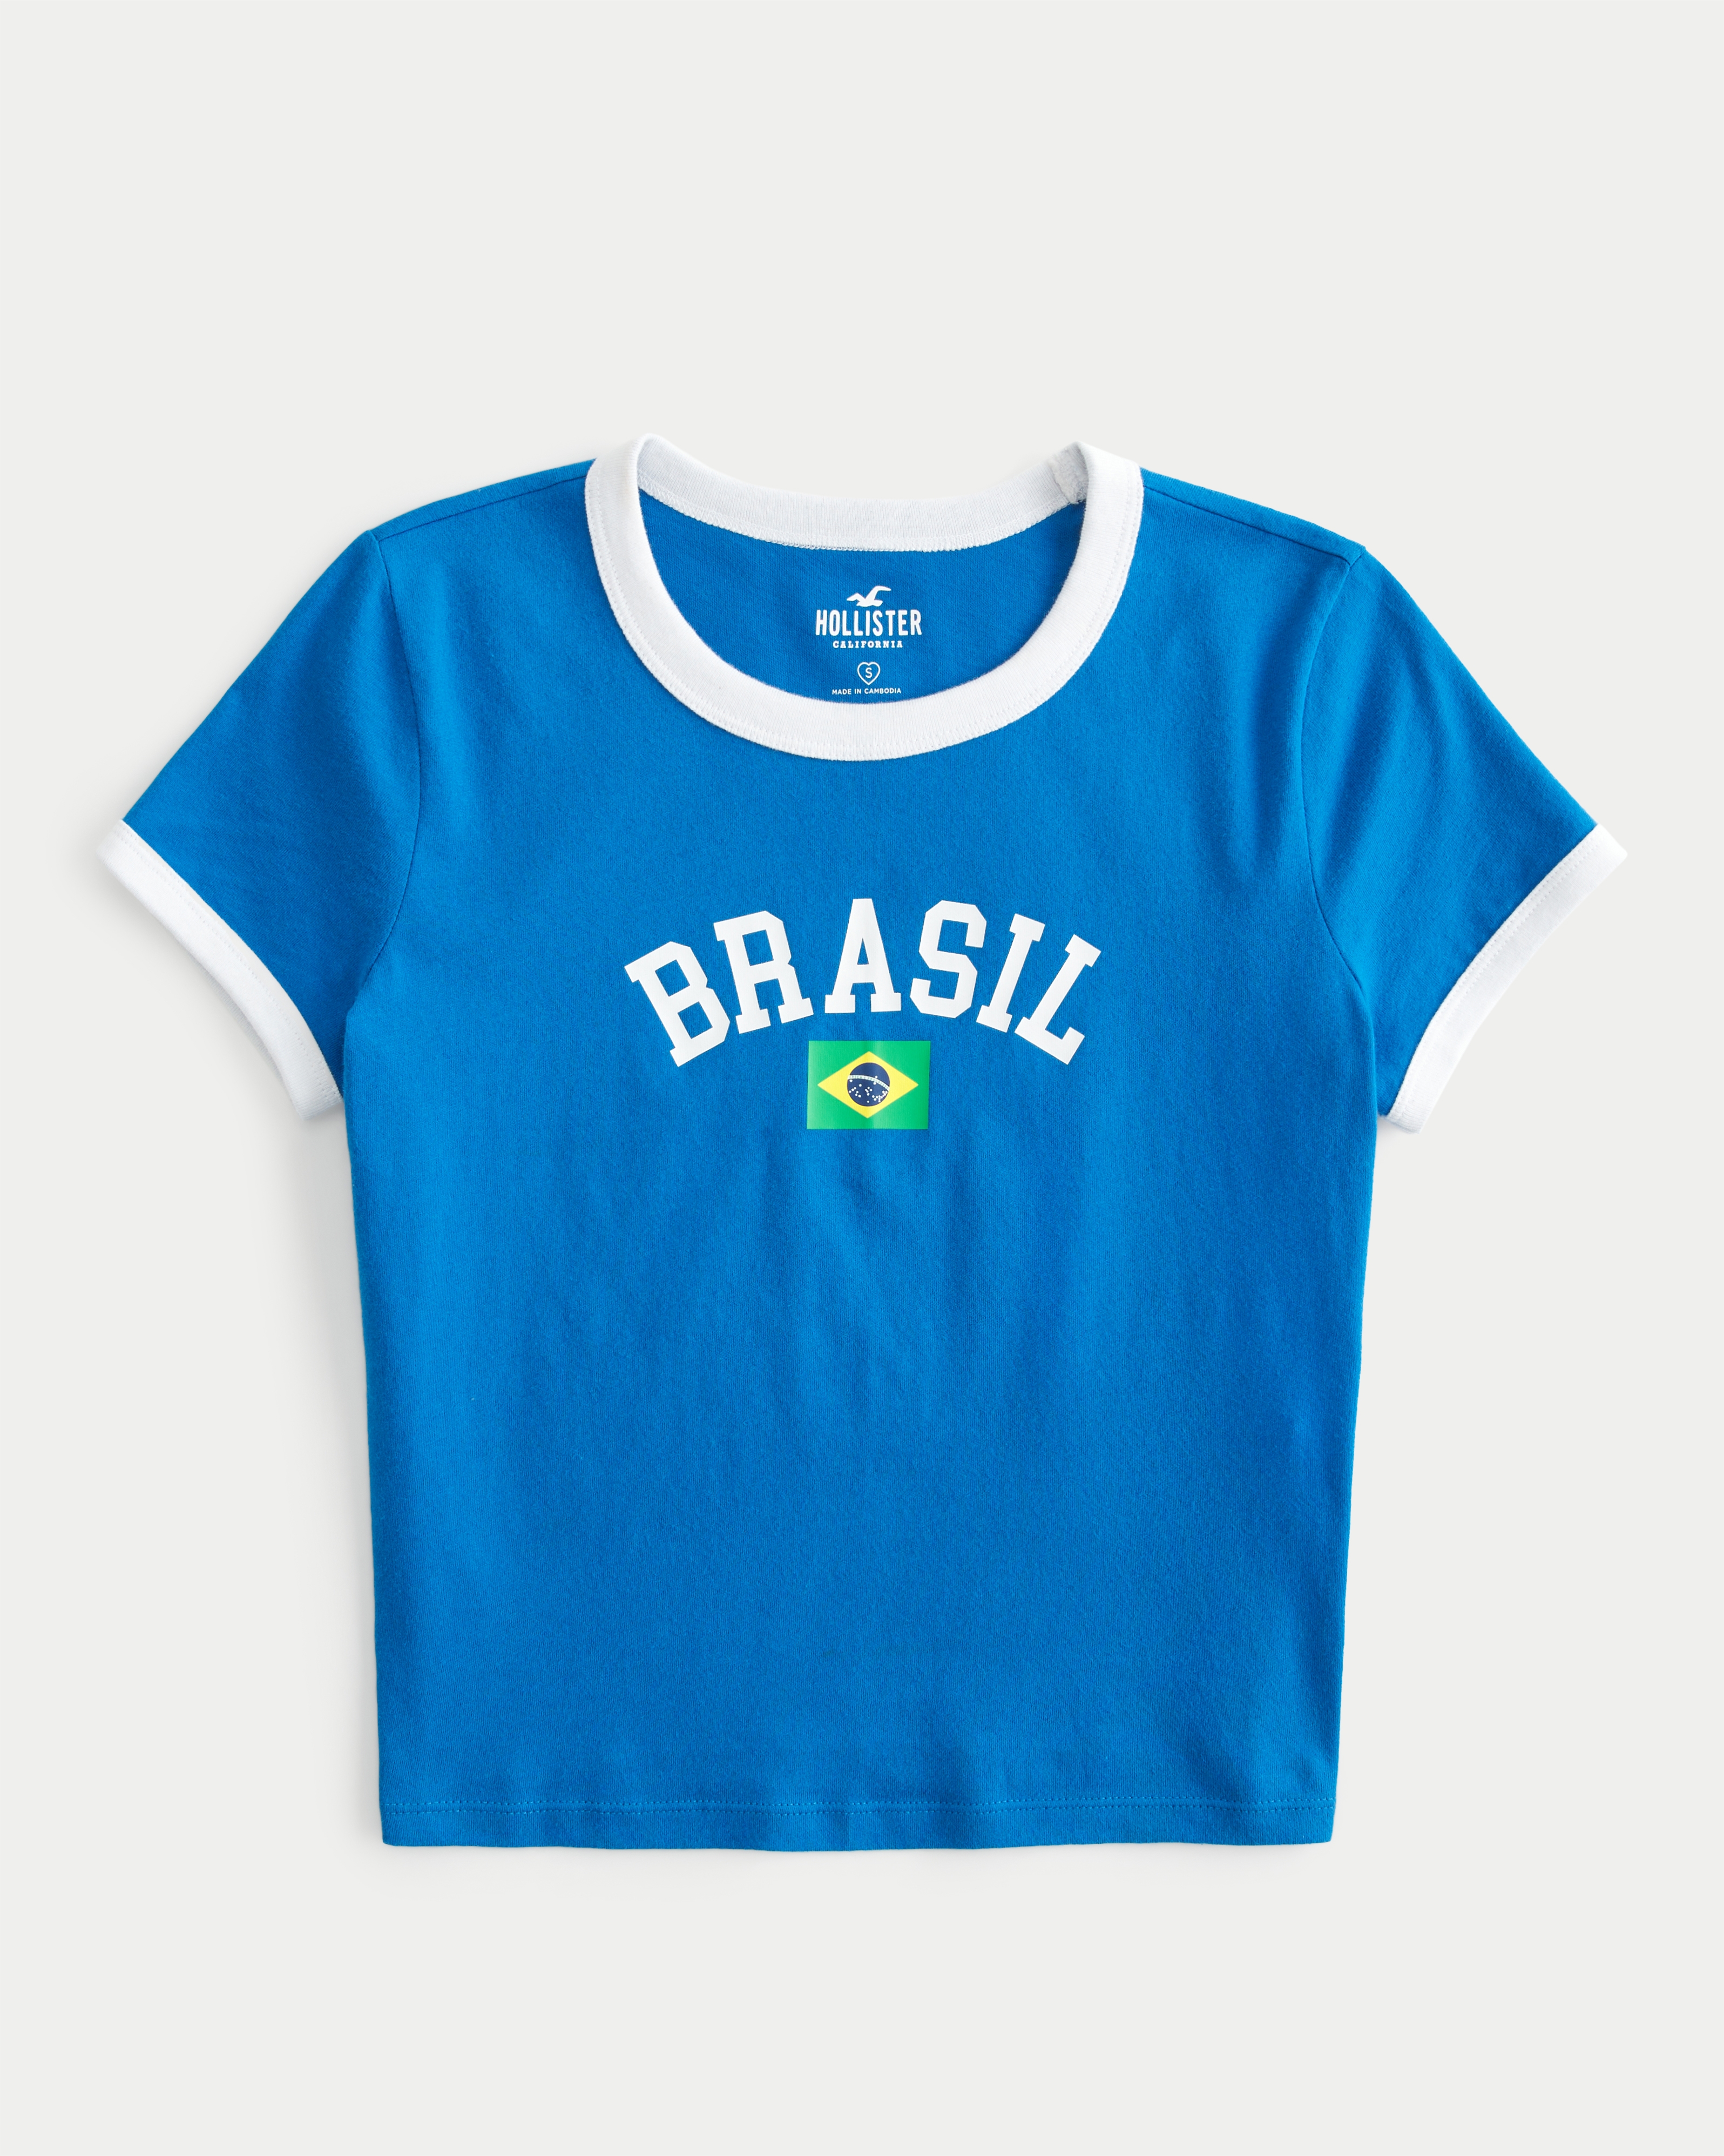 Brasil Graphic Baby Tee